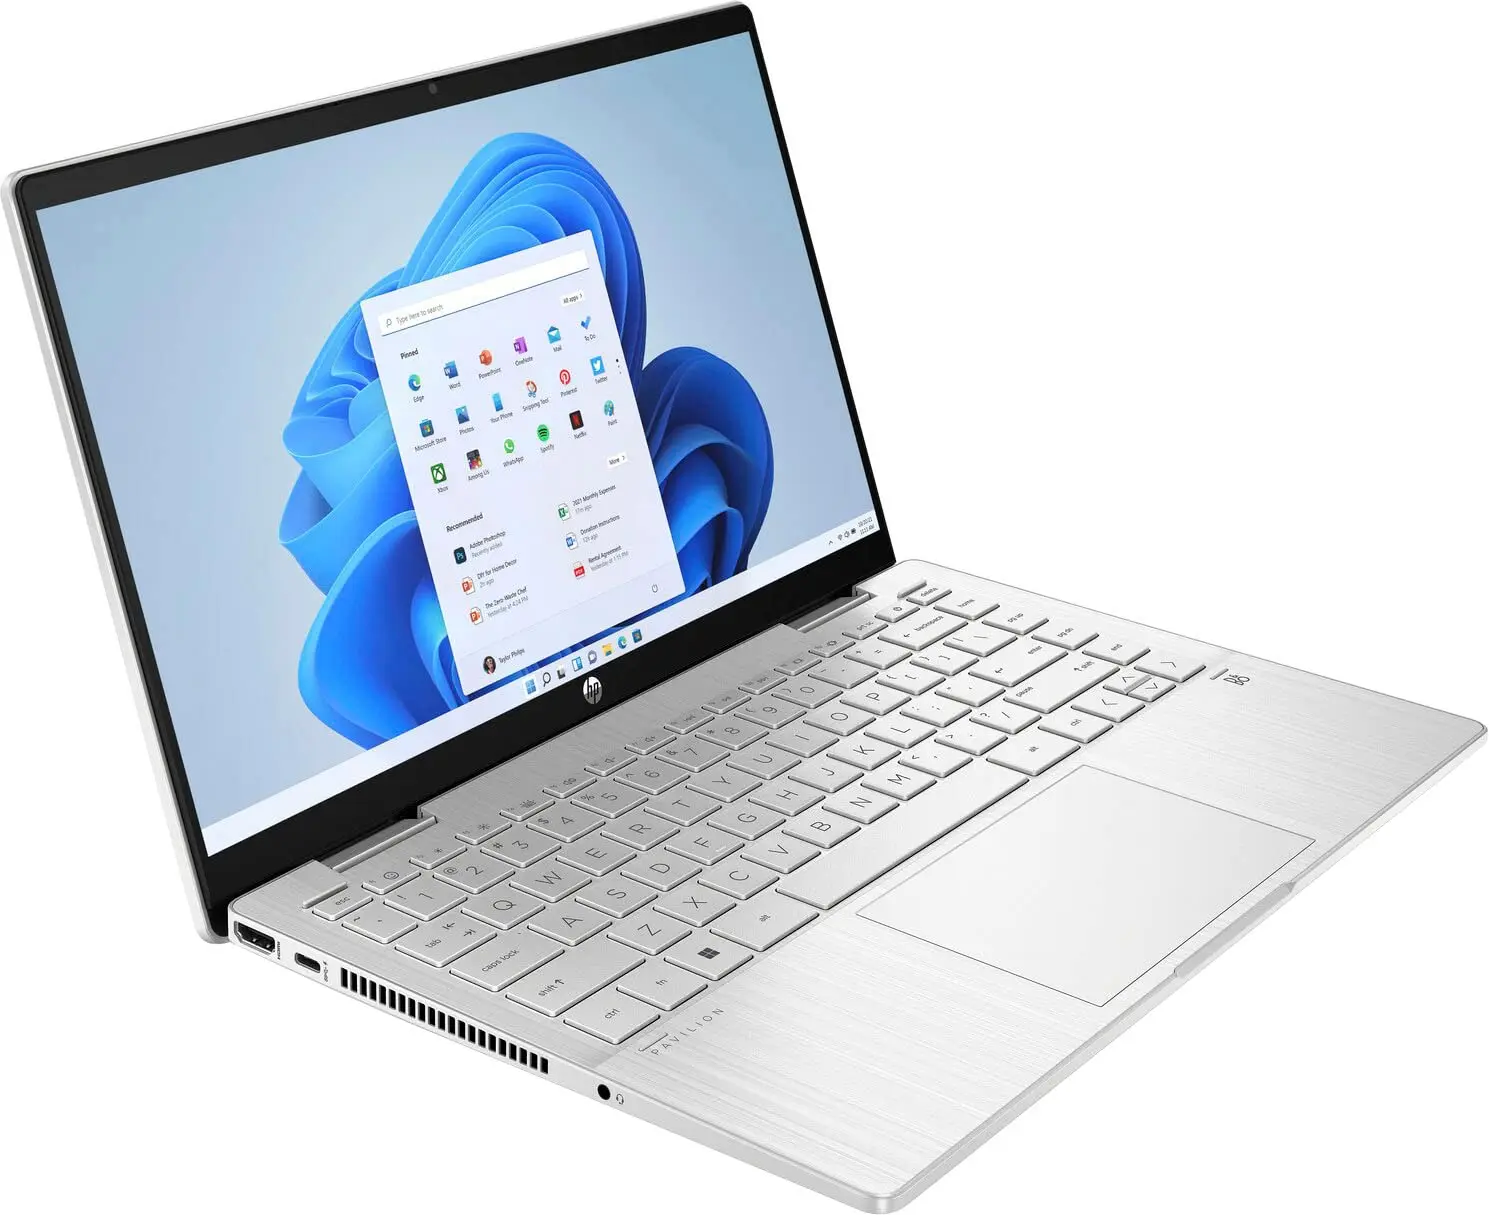 hewlett packard x360 windows laptop - What Windows is HP x360